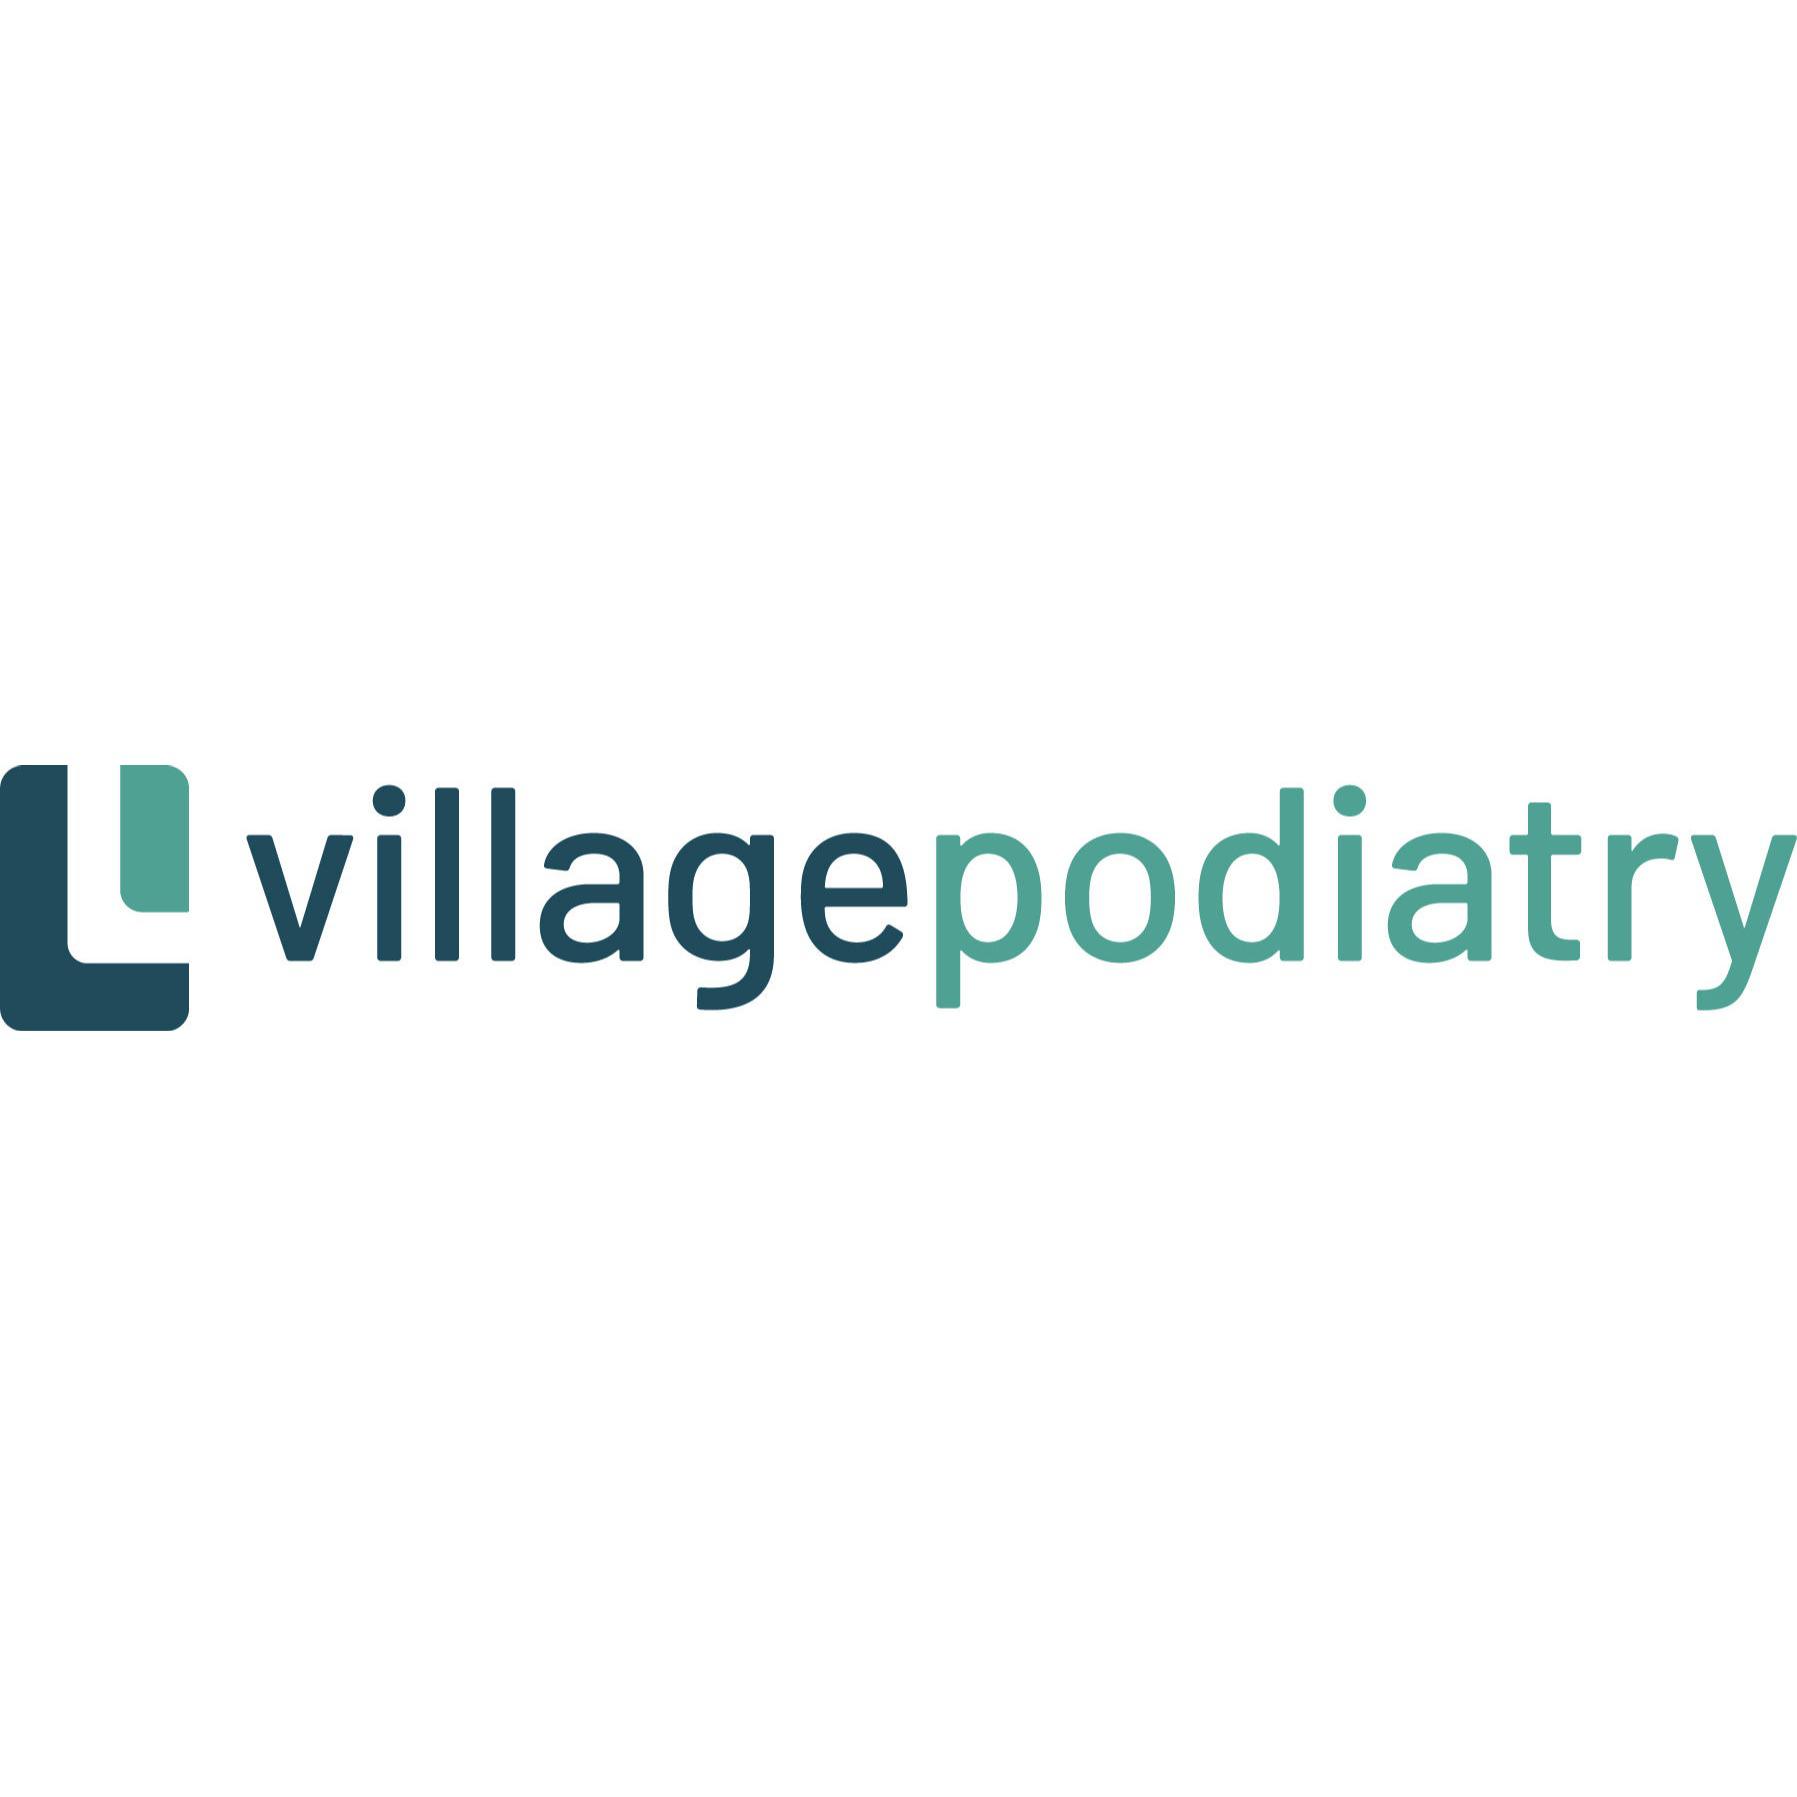 Village Podiatry - Austell, GA 30106-1182 - (770)745-5101 | ShowMeLocal.com